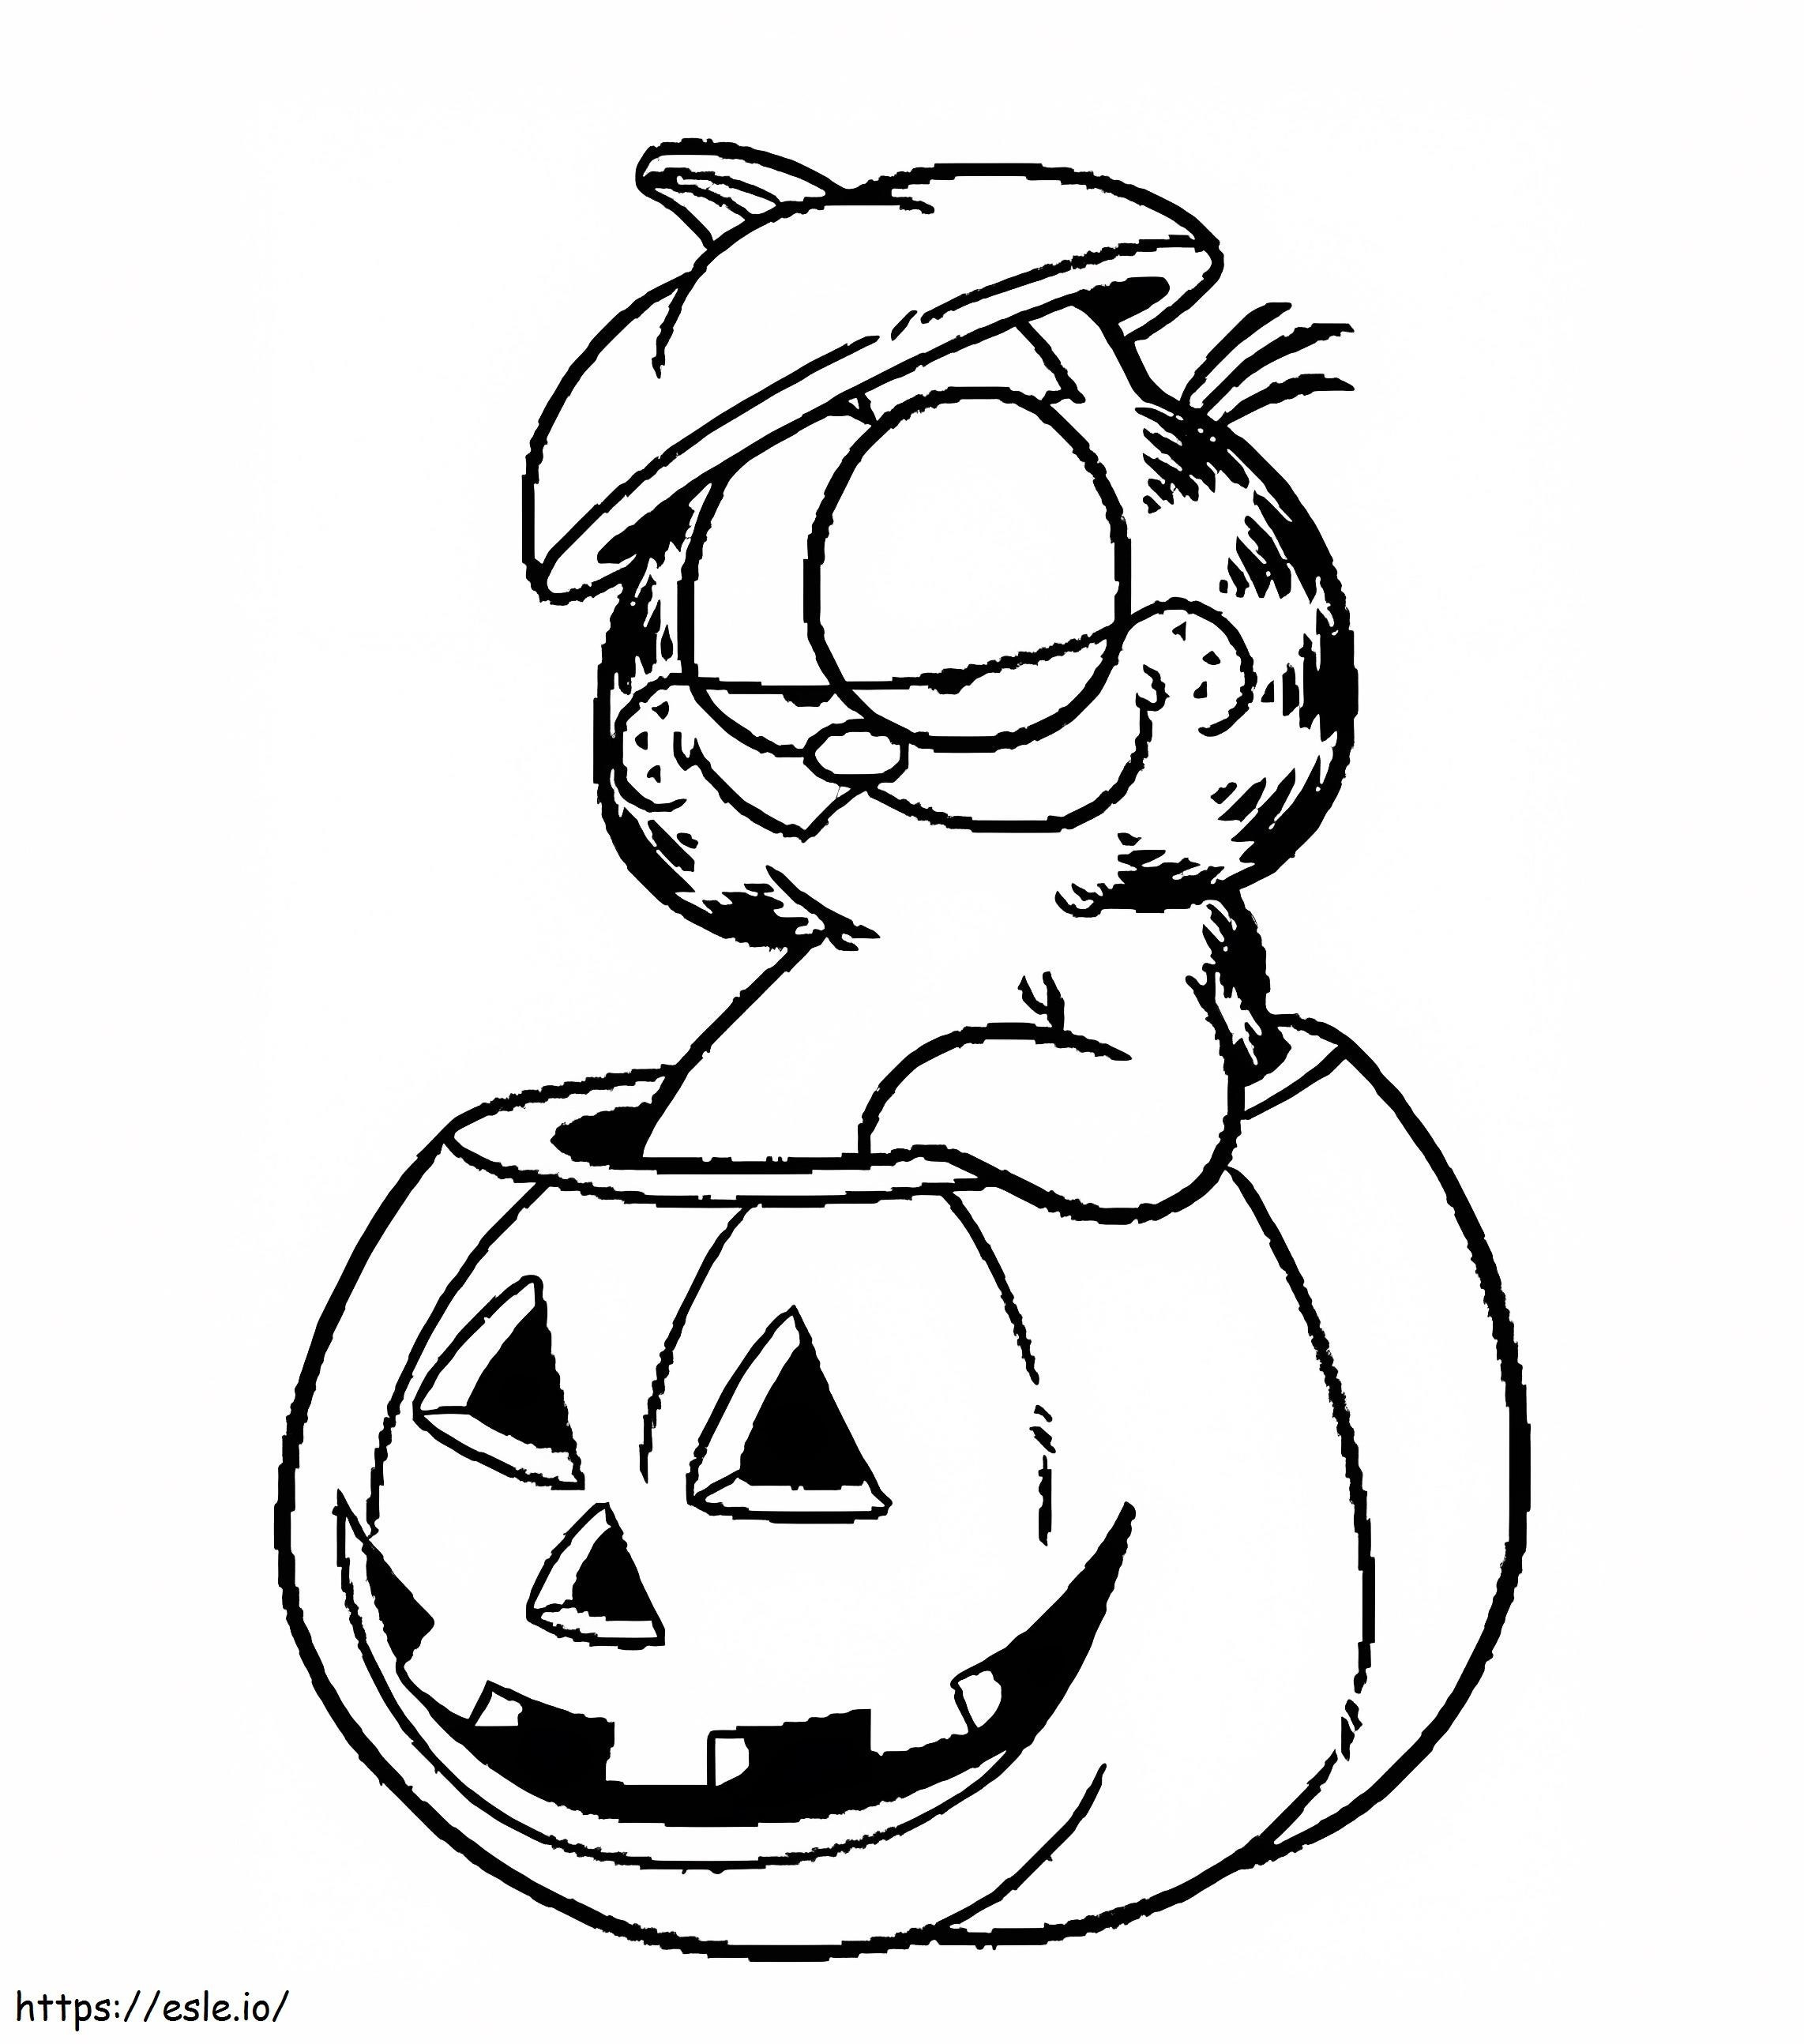 Halloweenowy Garfield Disneya kolorowanka